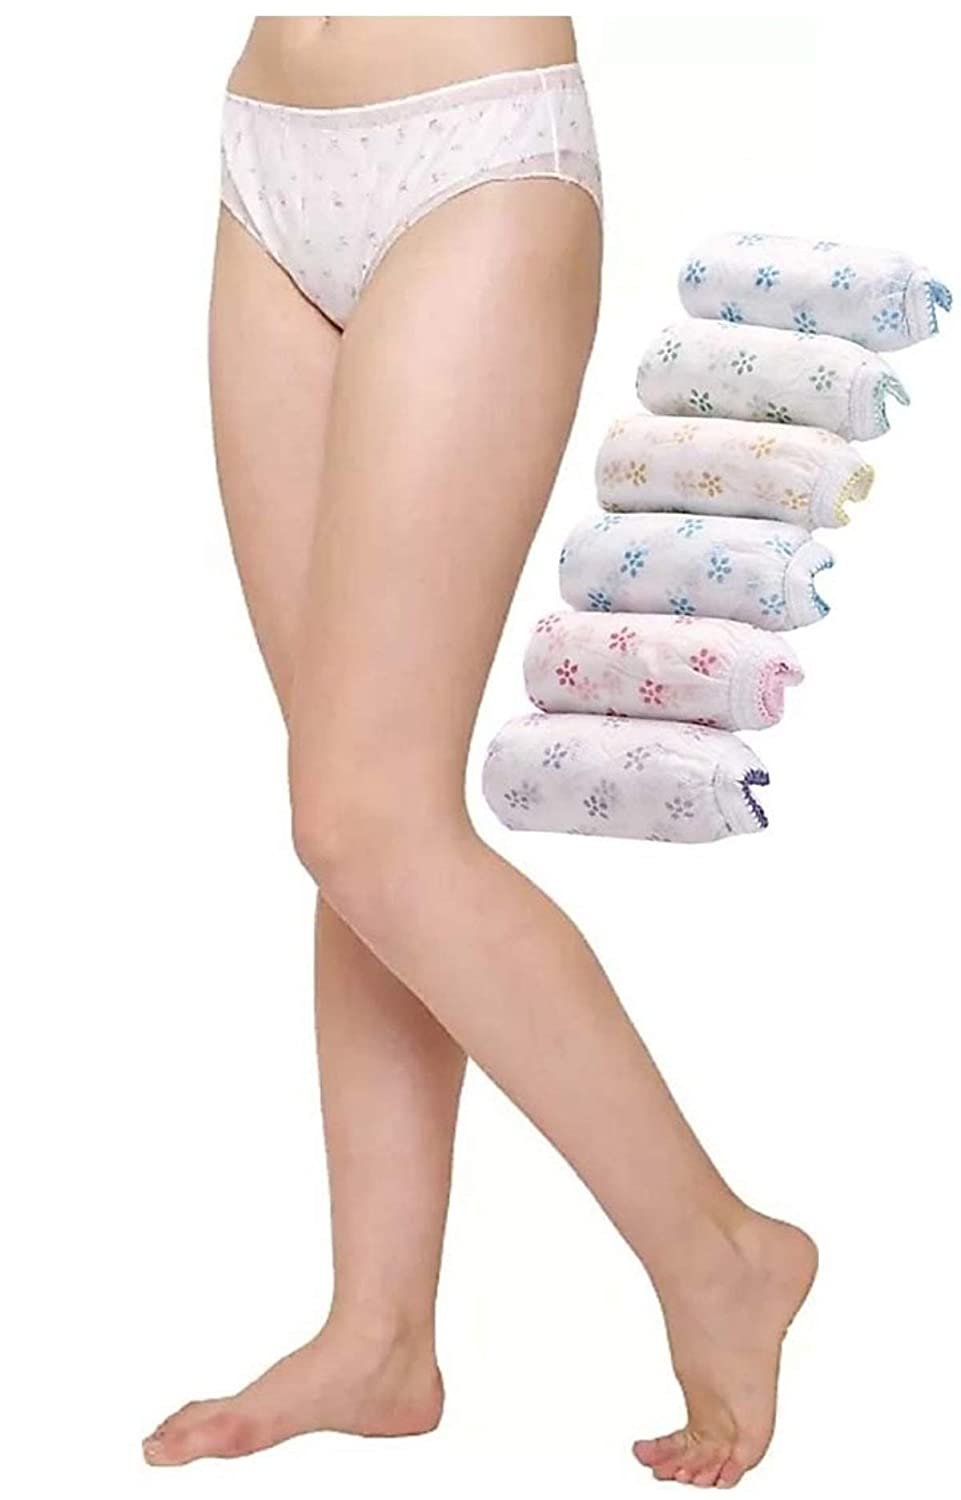 Disposable Underwear Maternity Underwear Disposable Maternity Underwear  5pcs High Waist Disposable Maternity Women Panties Soft Cotton  UnderwearXXXL 